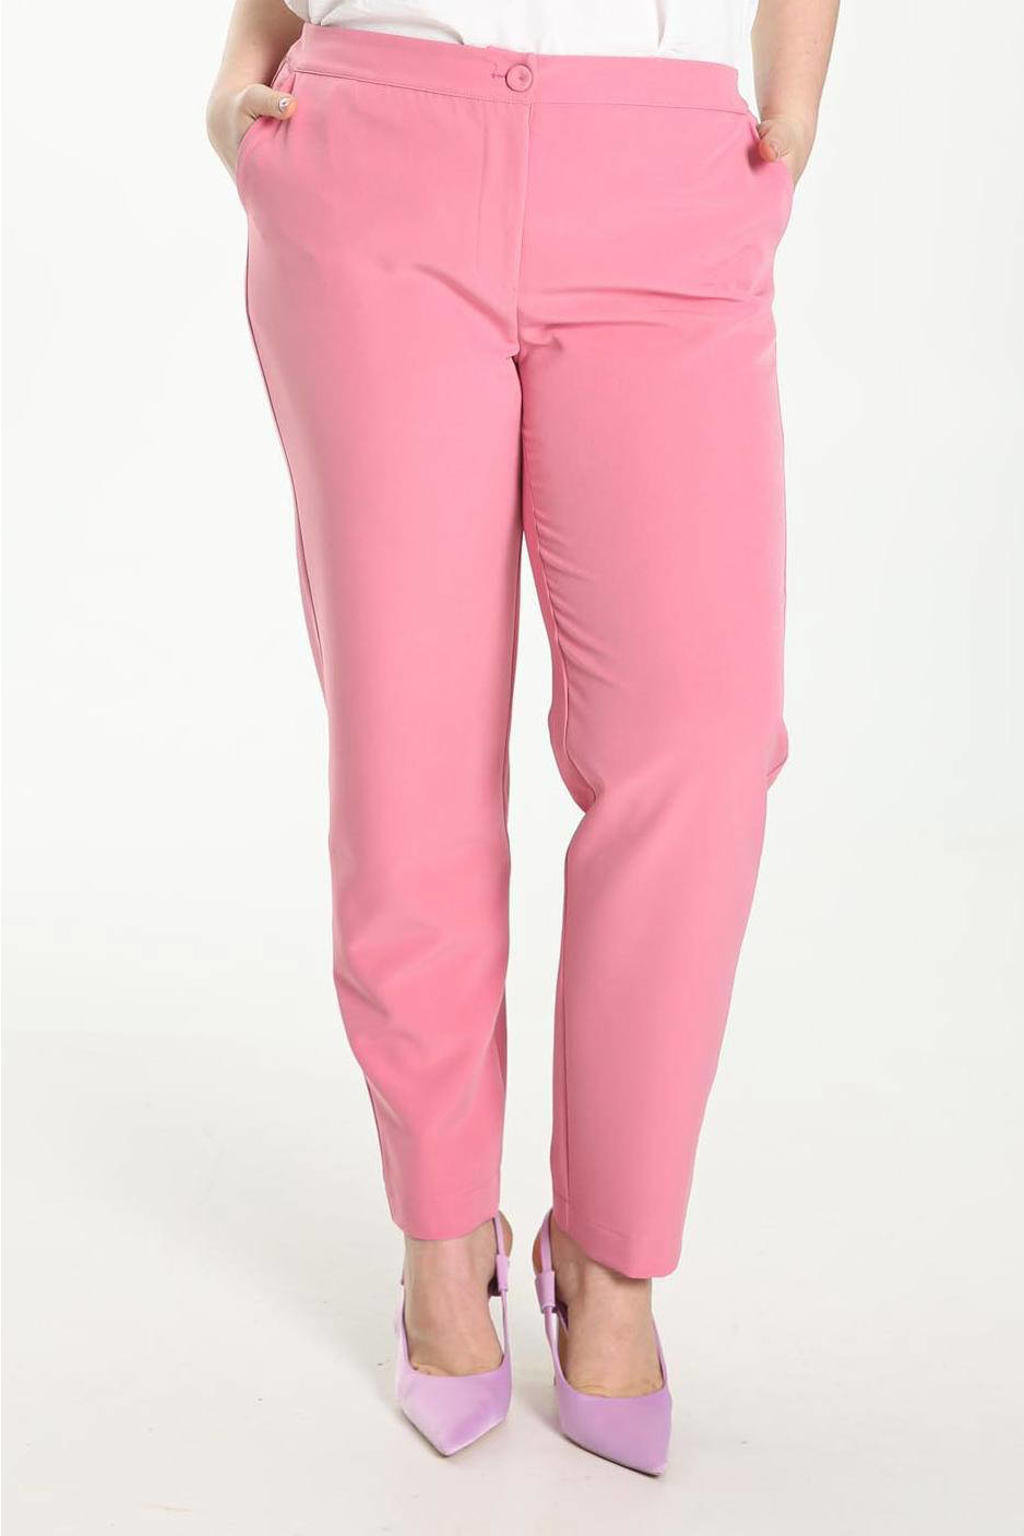 Roze dames PROMISS pantalon elastische band van polyester met slim fit, regular waist en rits- en knoopsluiting